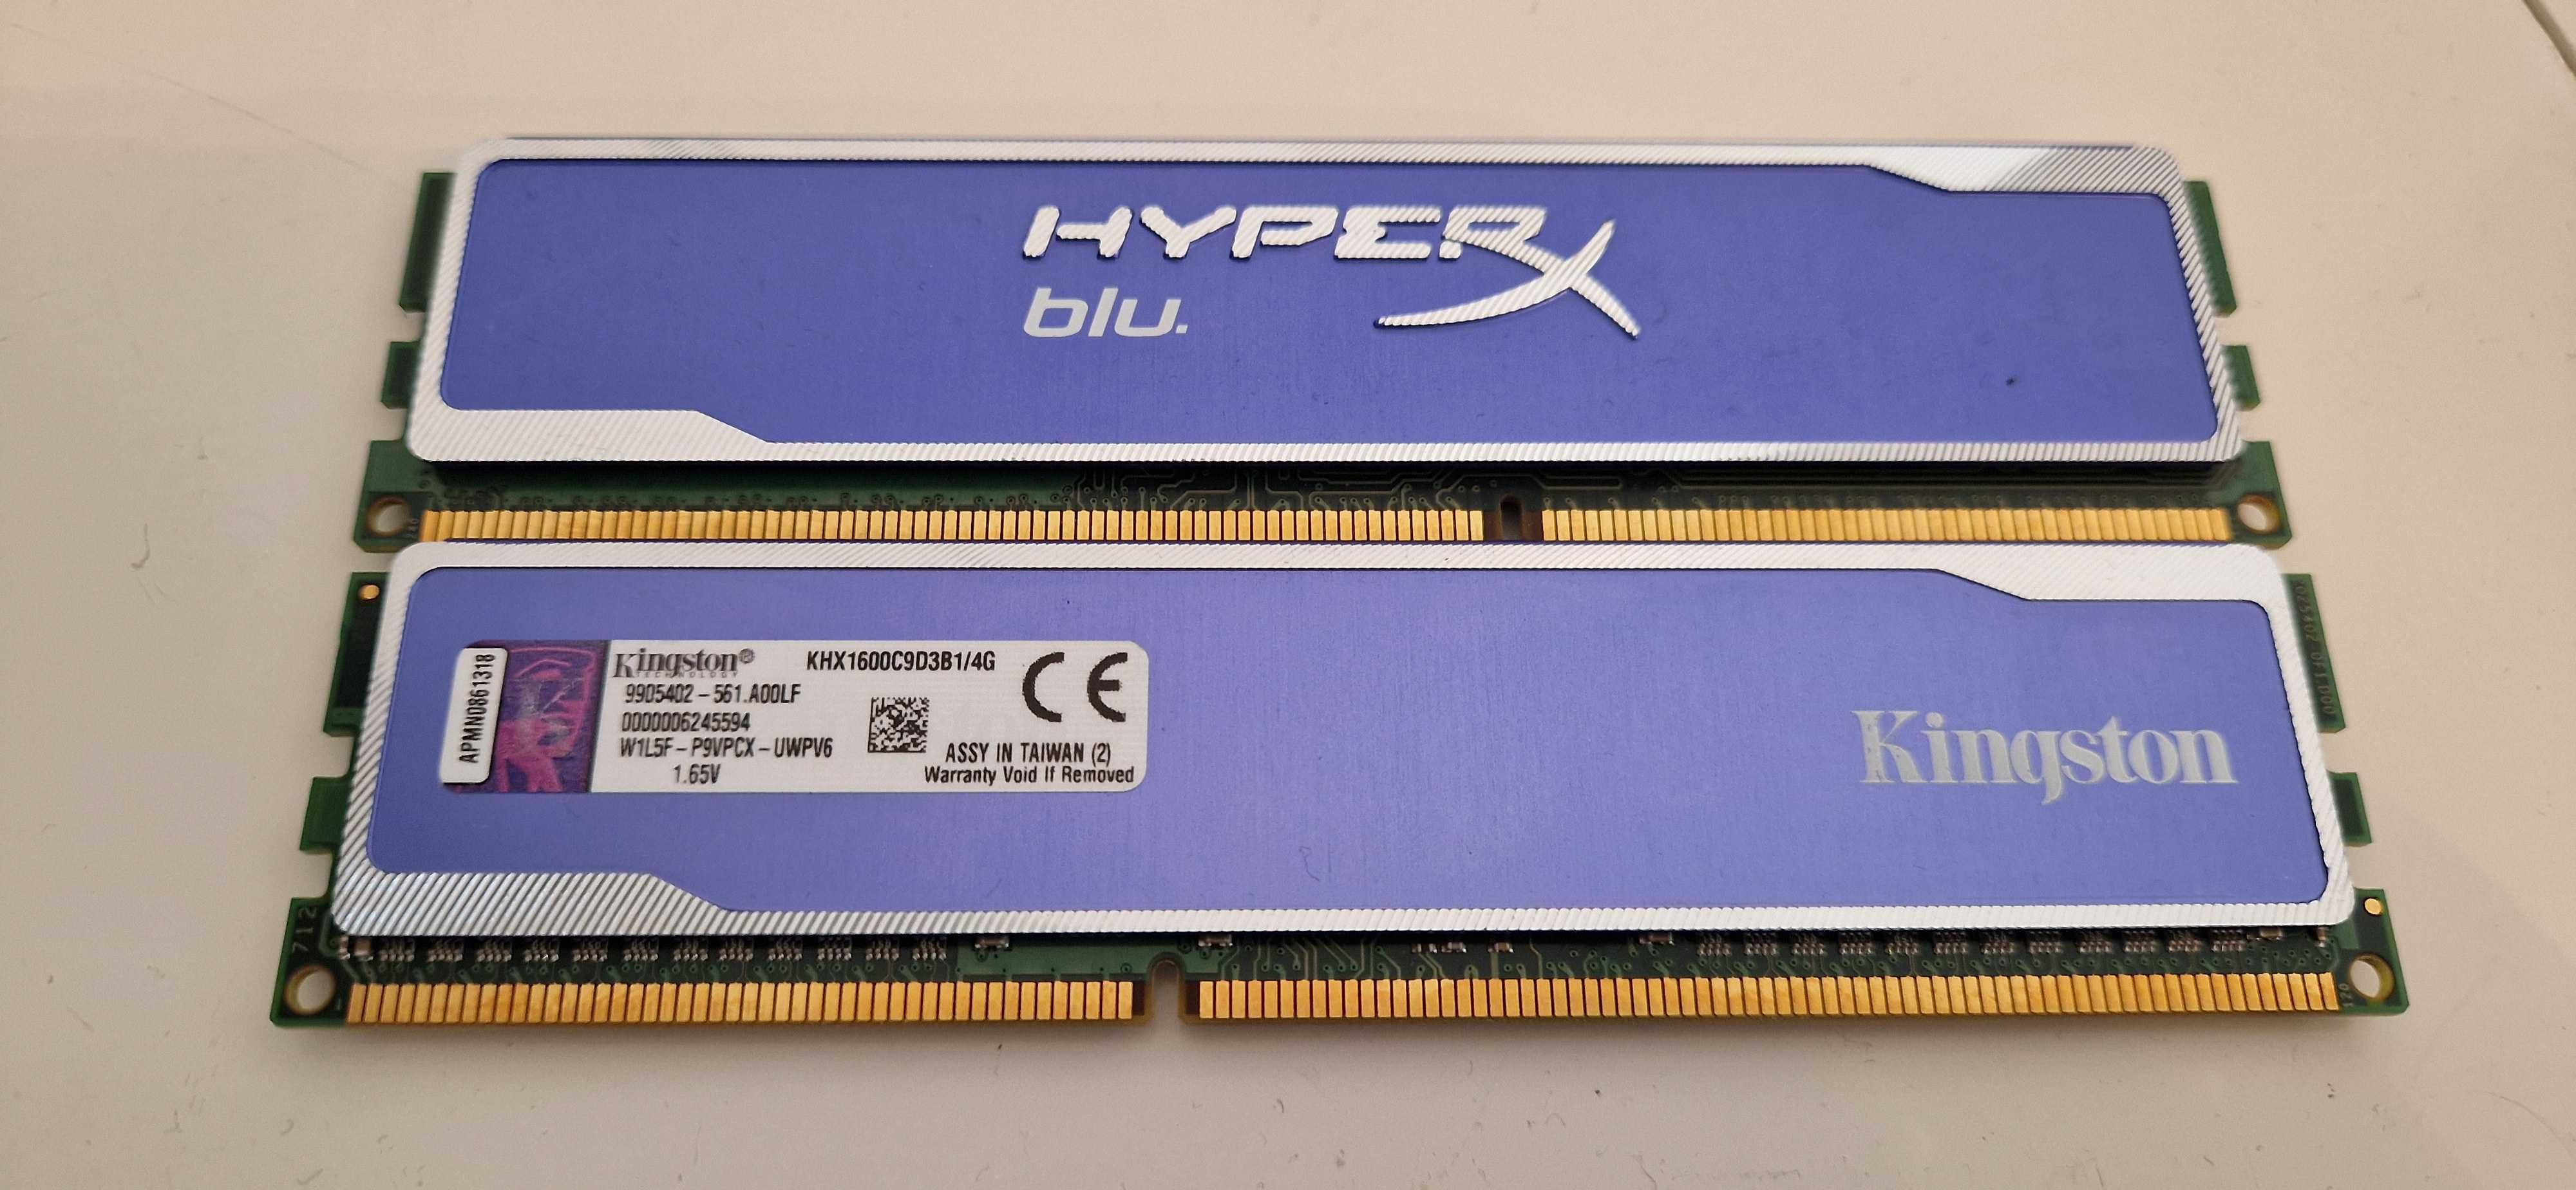 KingstonHyperX blu 8GB (4x2) DDR3 1600